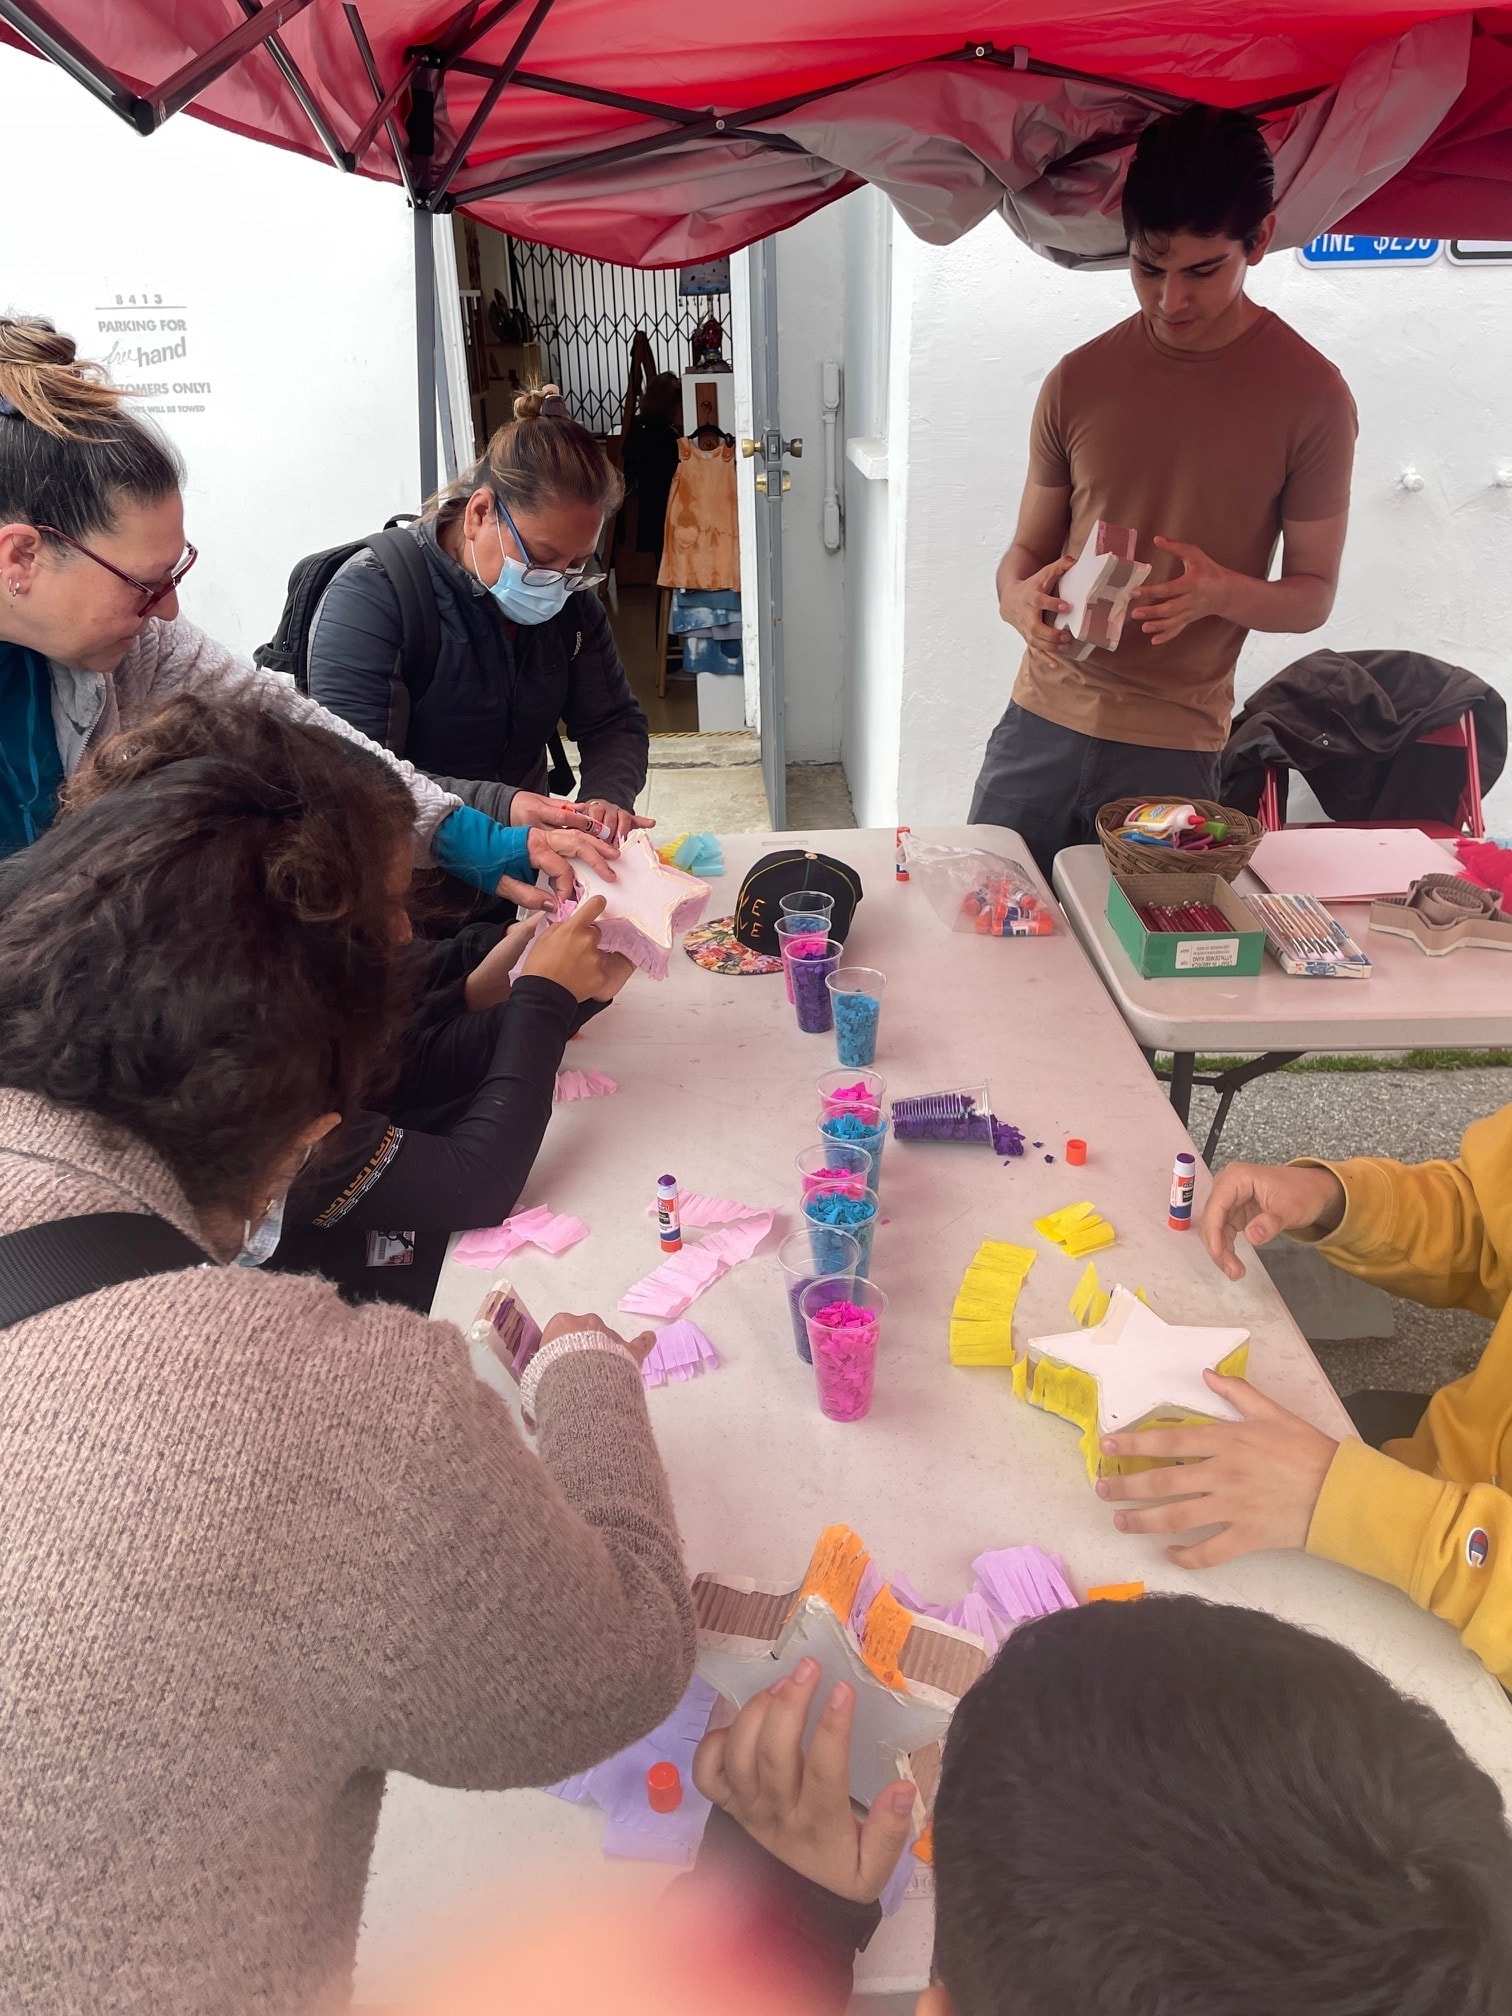 Van Nuys high schoolers and Amazing Piñata Studios teacher craft star piñatas together with crepe paper